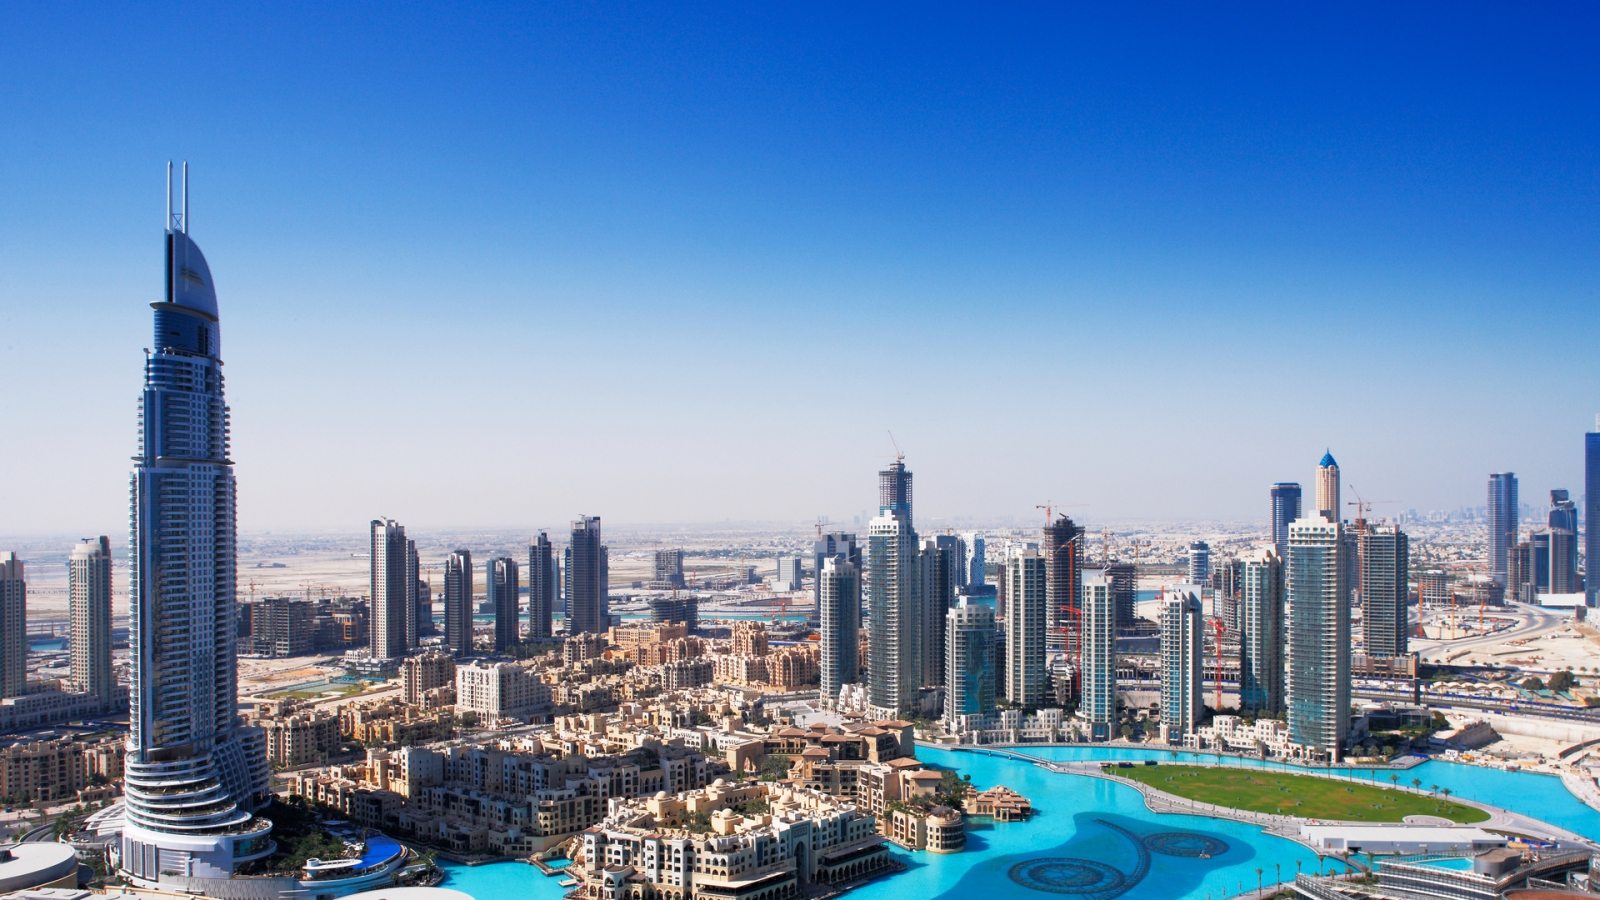 Free download Dubai Skyline 4K Ultra HD wallpaper 4k